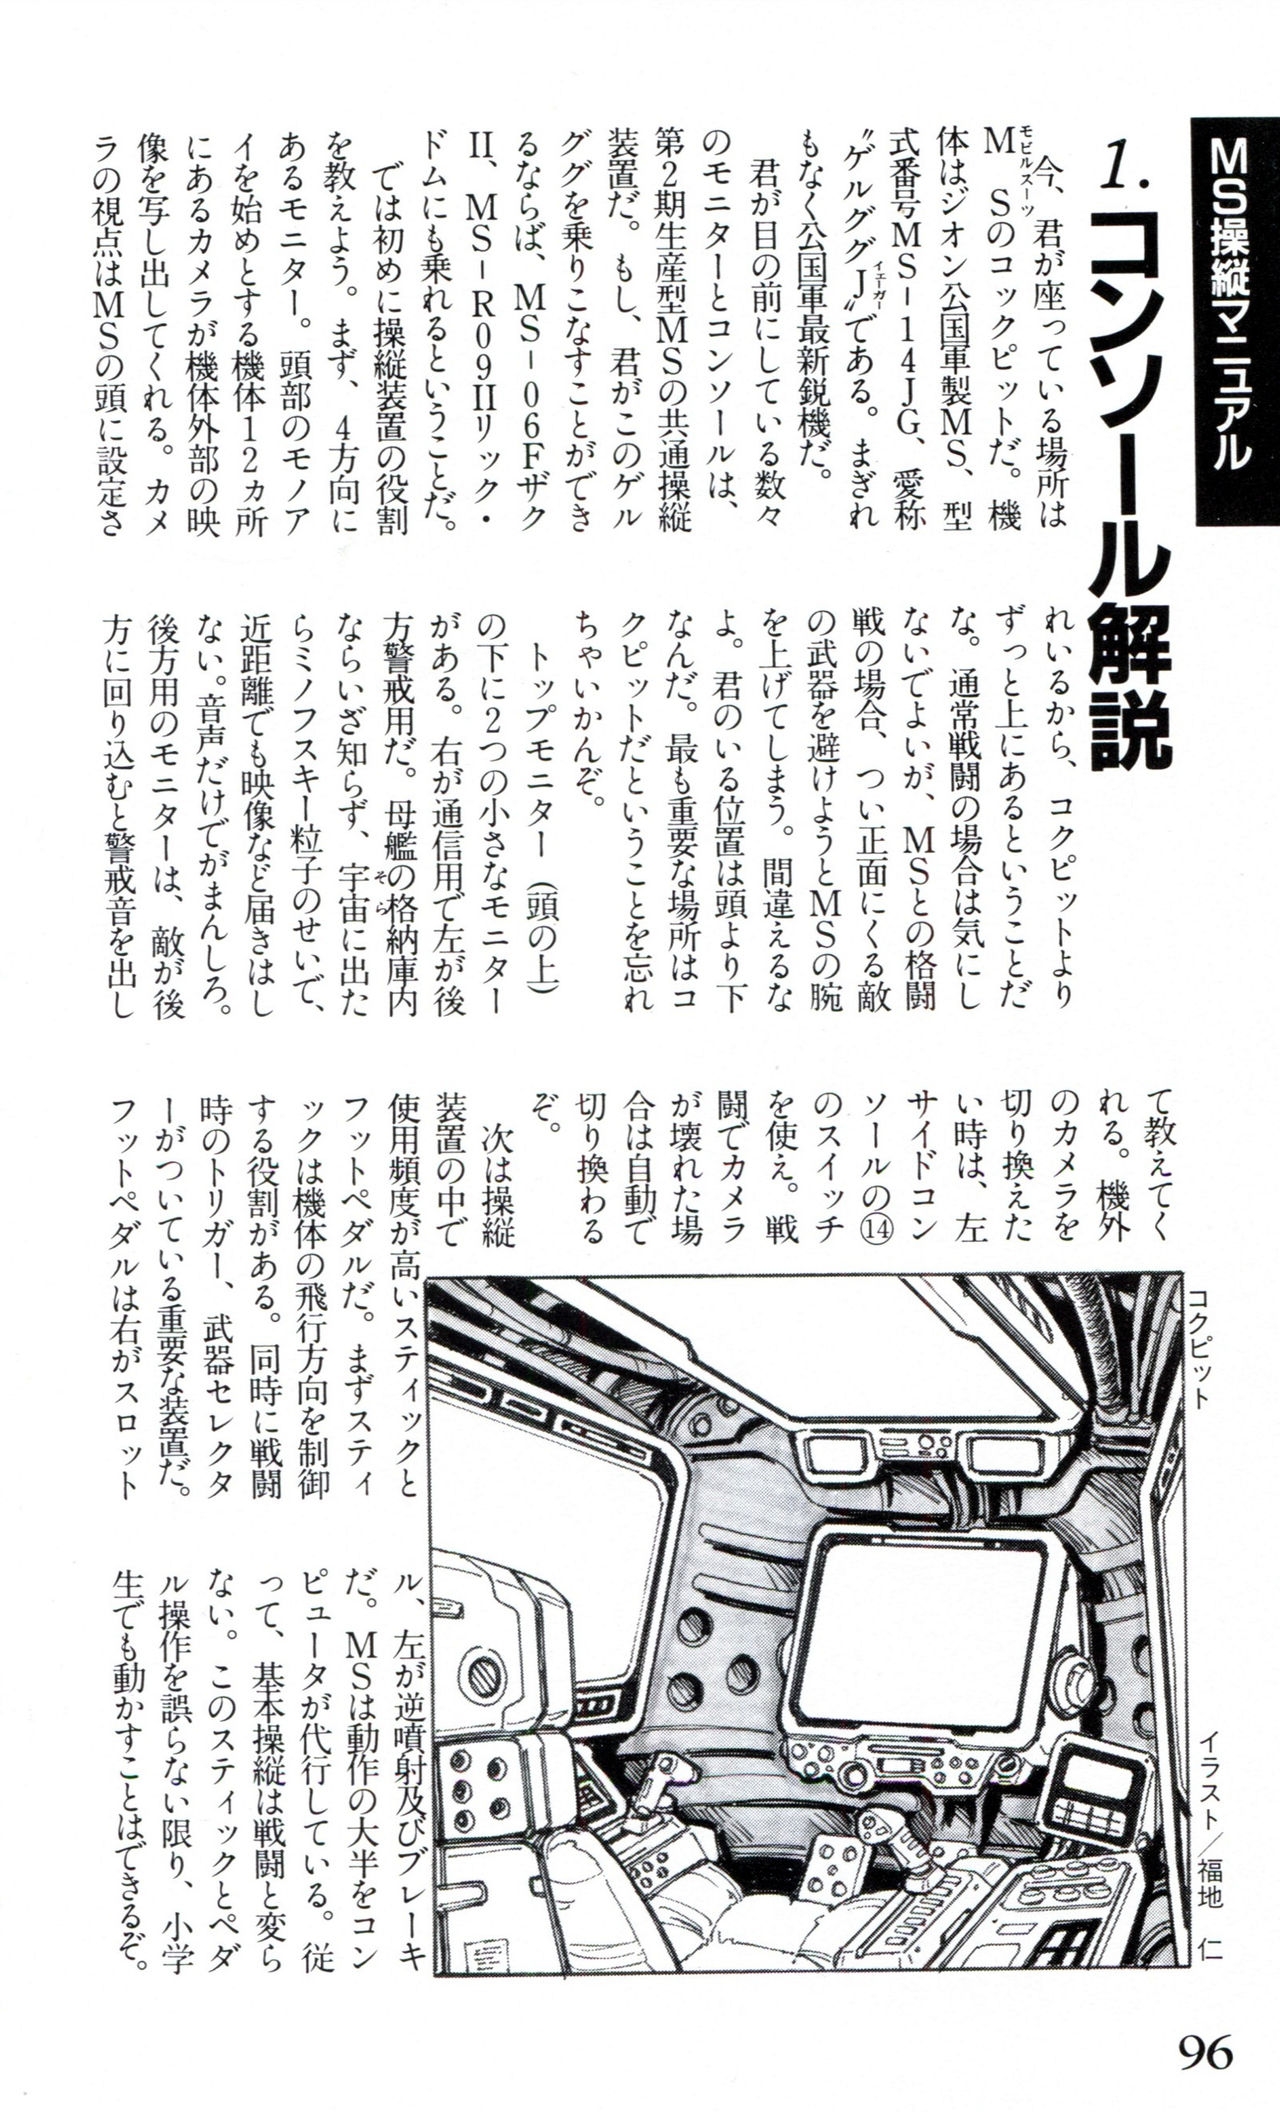 Mobile Suit Gundam U.C. Box MS Gundam Encyclopedia NO.01 - Mobile Suit Gundam 95